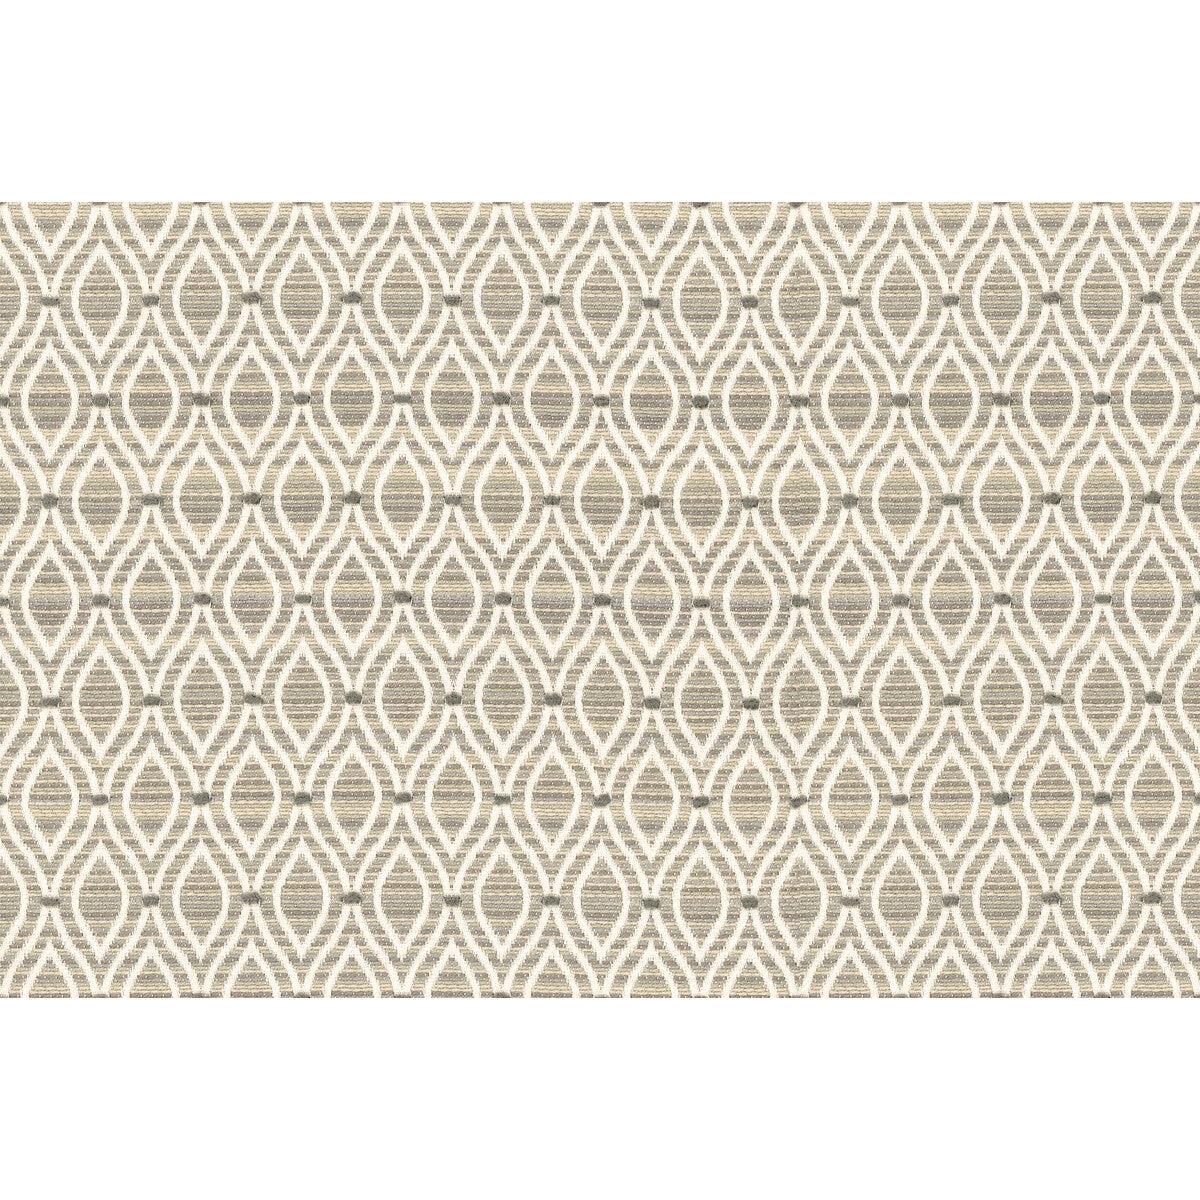 Kravet Smart fabric in 34288-1611 color - pattern 34288.1611.0 - by Kravet Smart